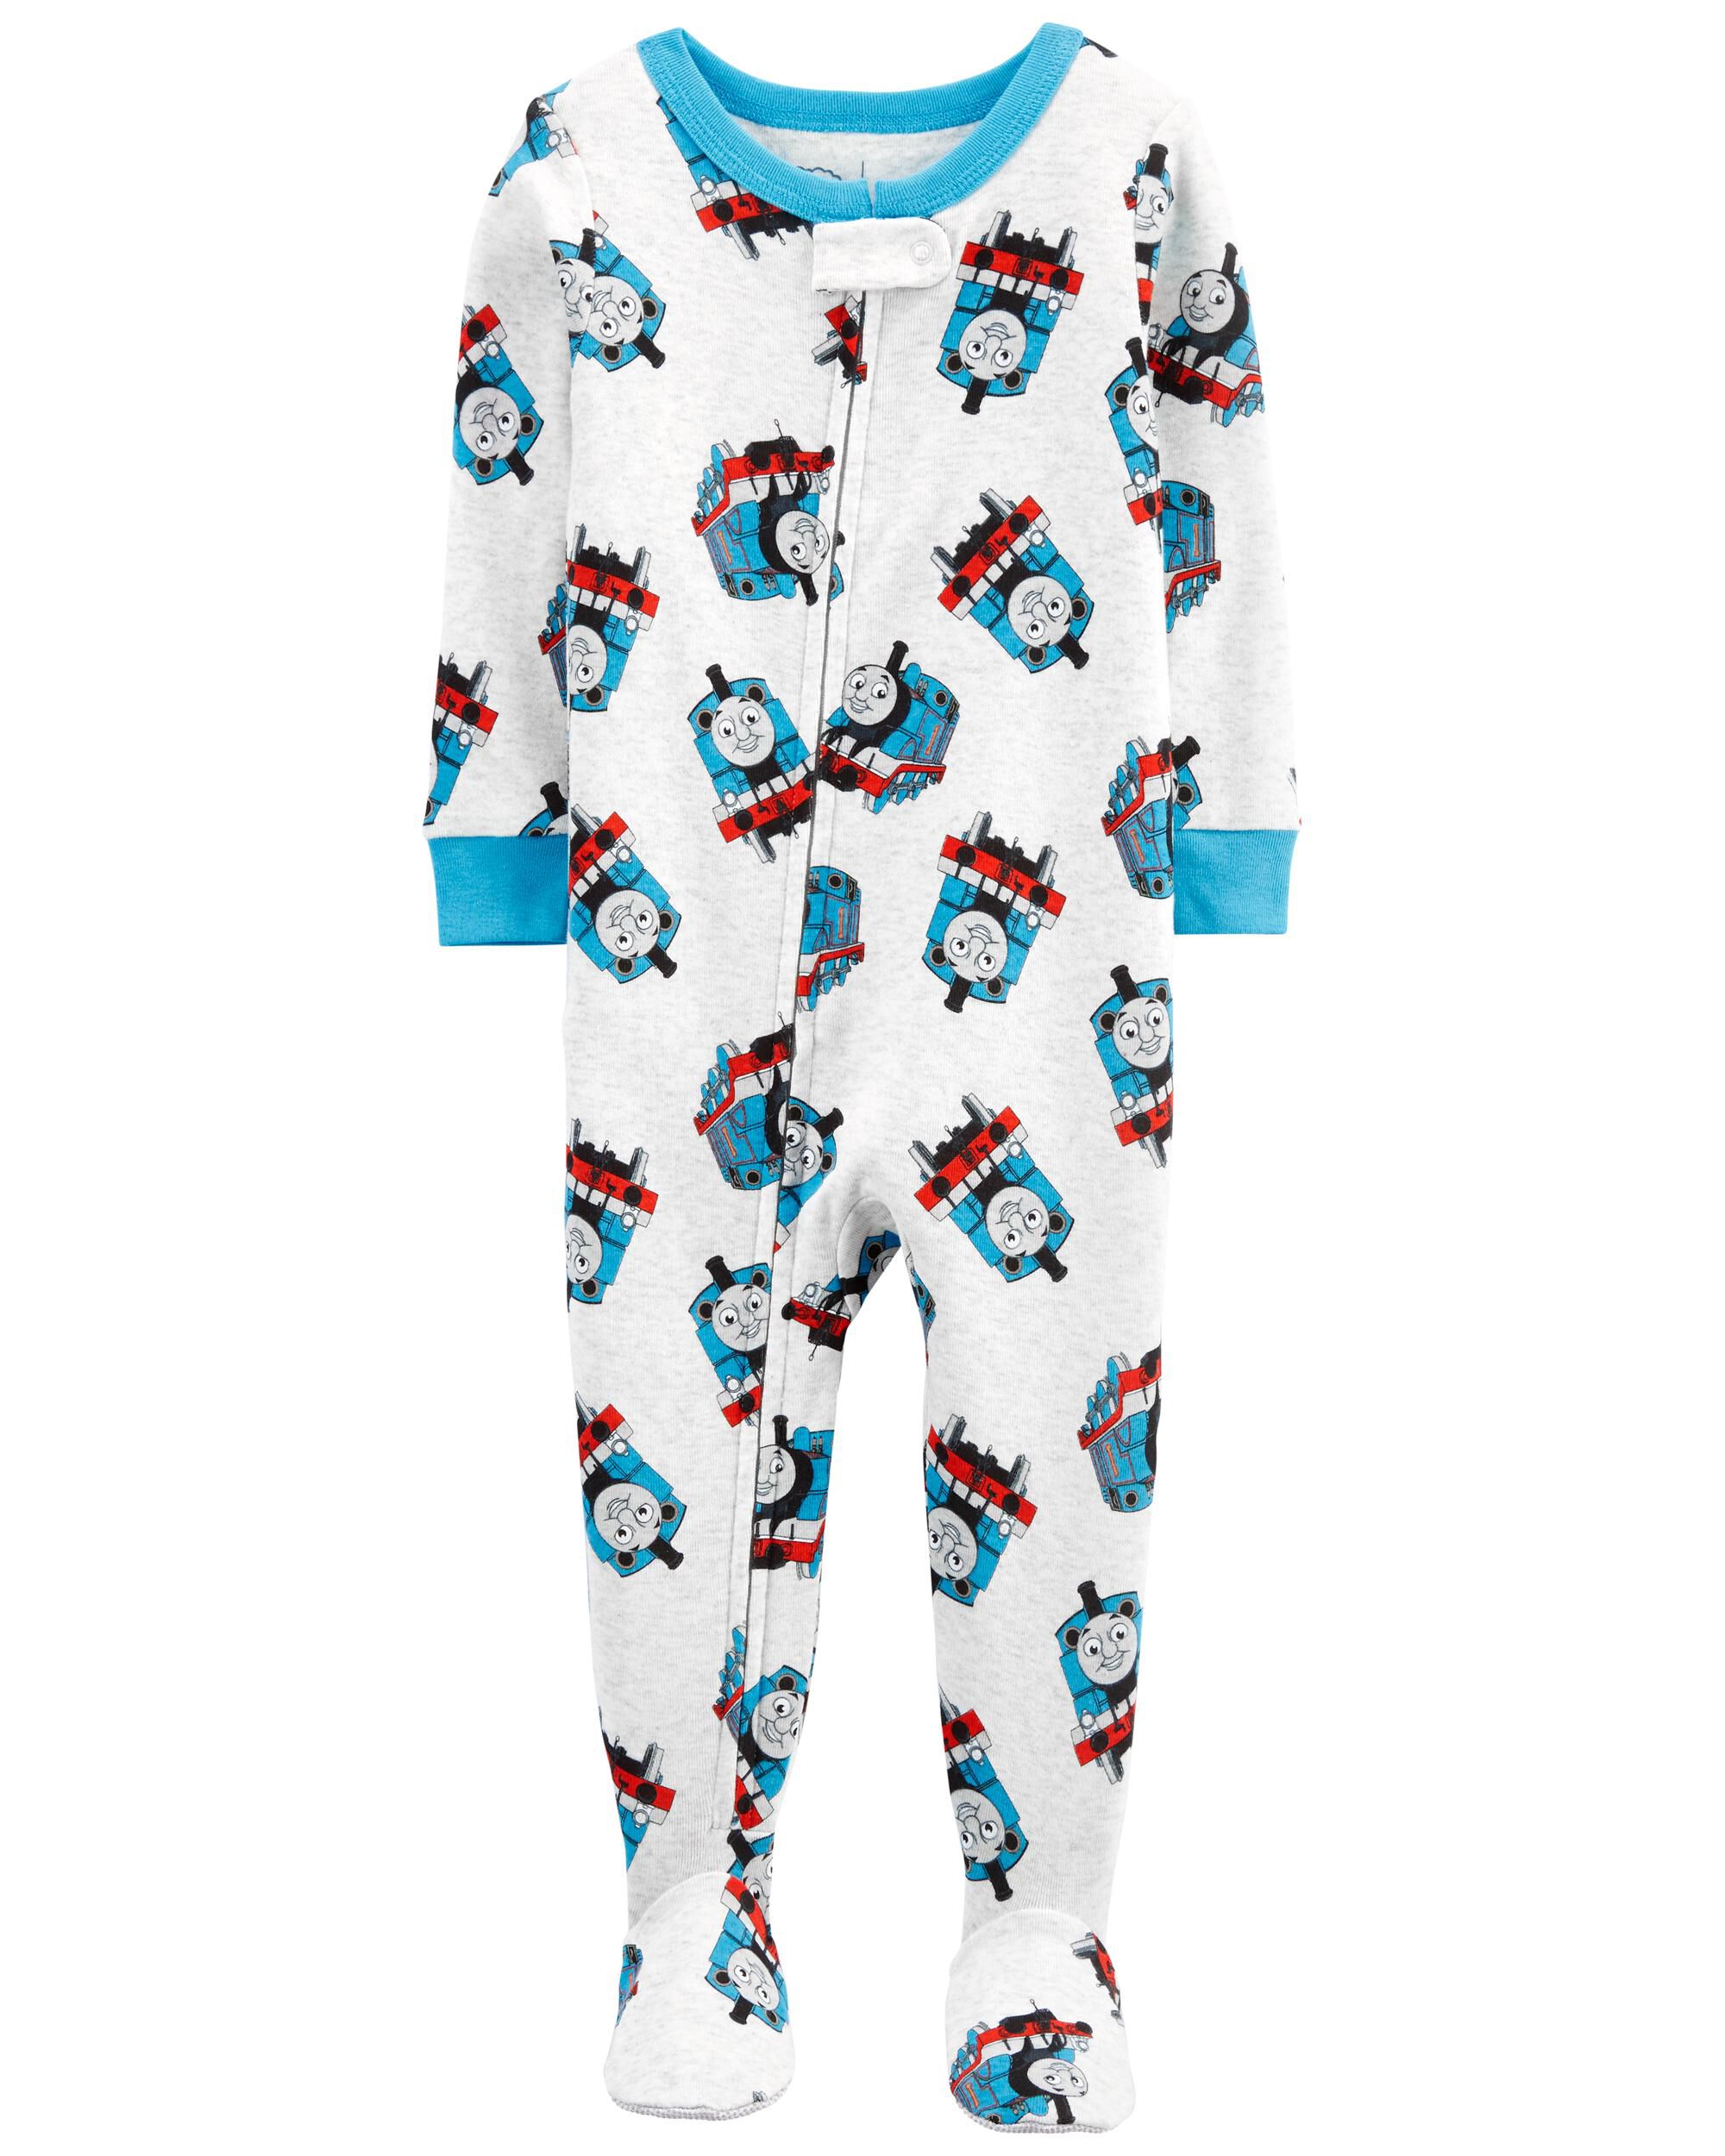 Thomas & Friends Toddler Boys Two-Piece Pajama Short Set Size 2T 3T 4T $34 